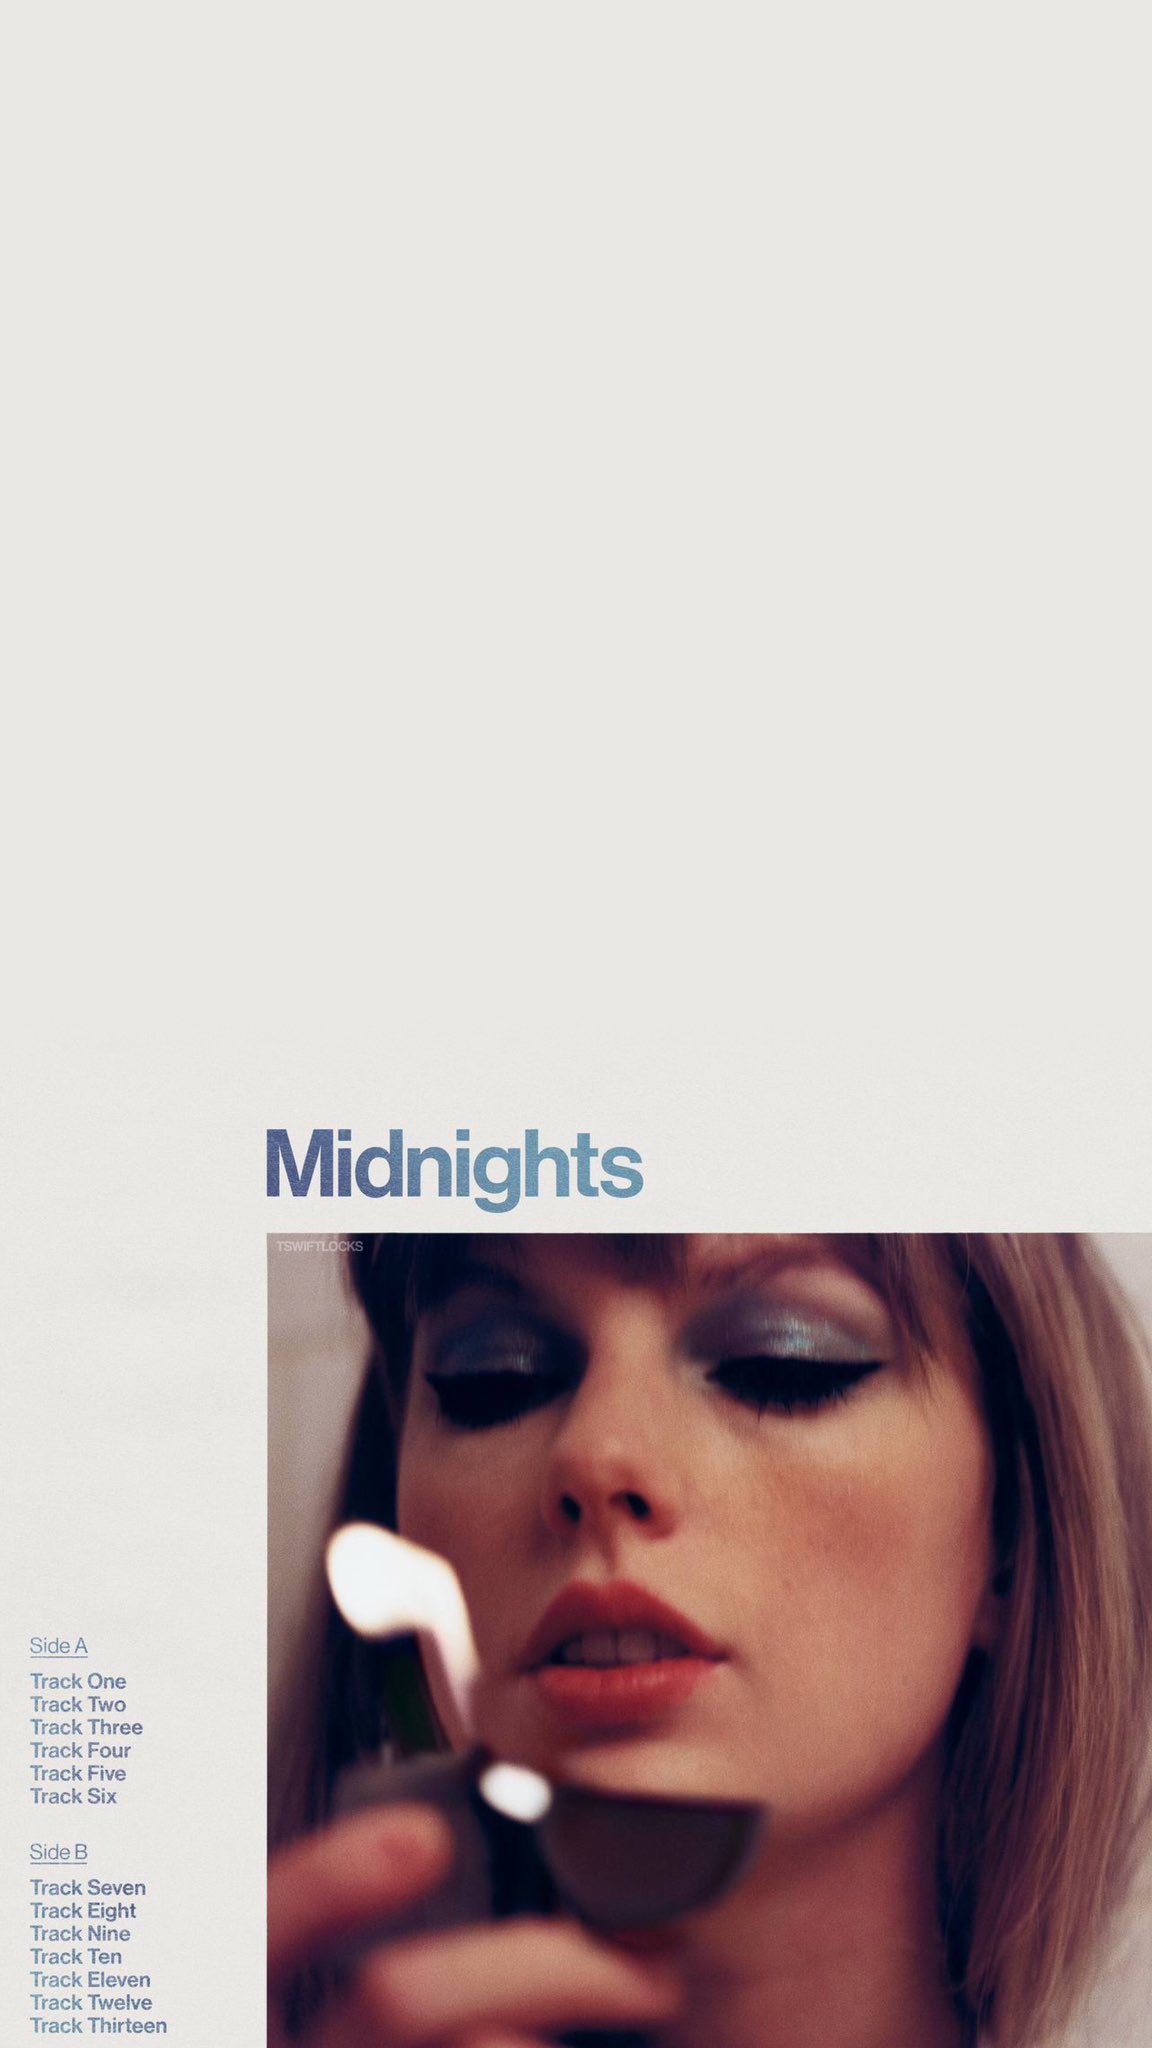 vick on X Taylor swift midnight album lyrics wallpapers  httpstcoMCa4hSrZo6  X